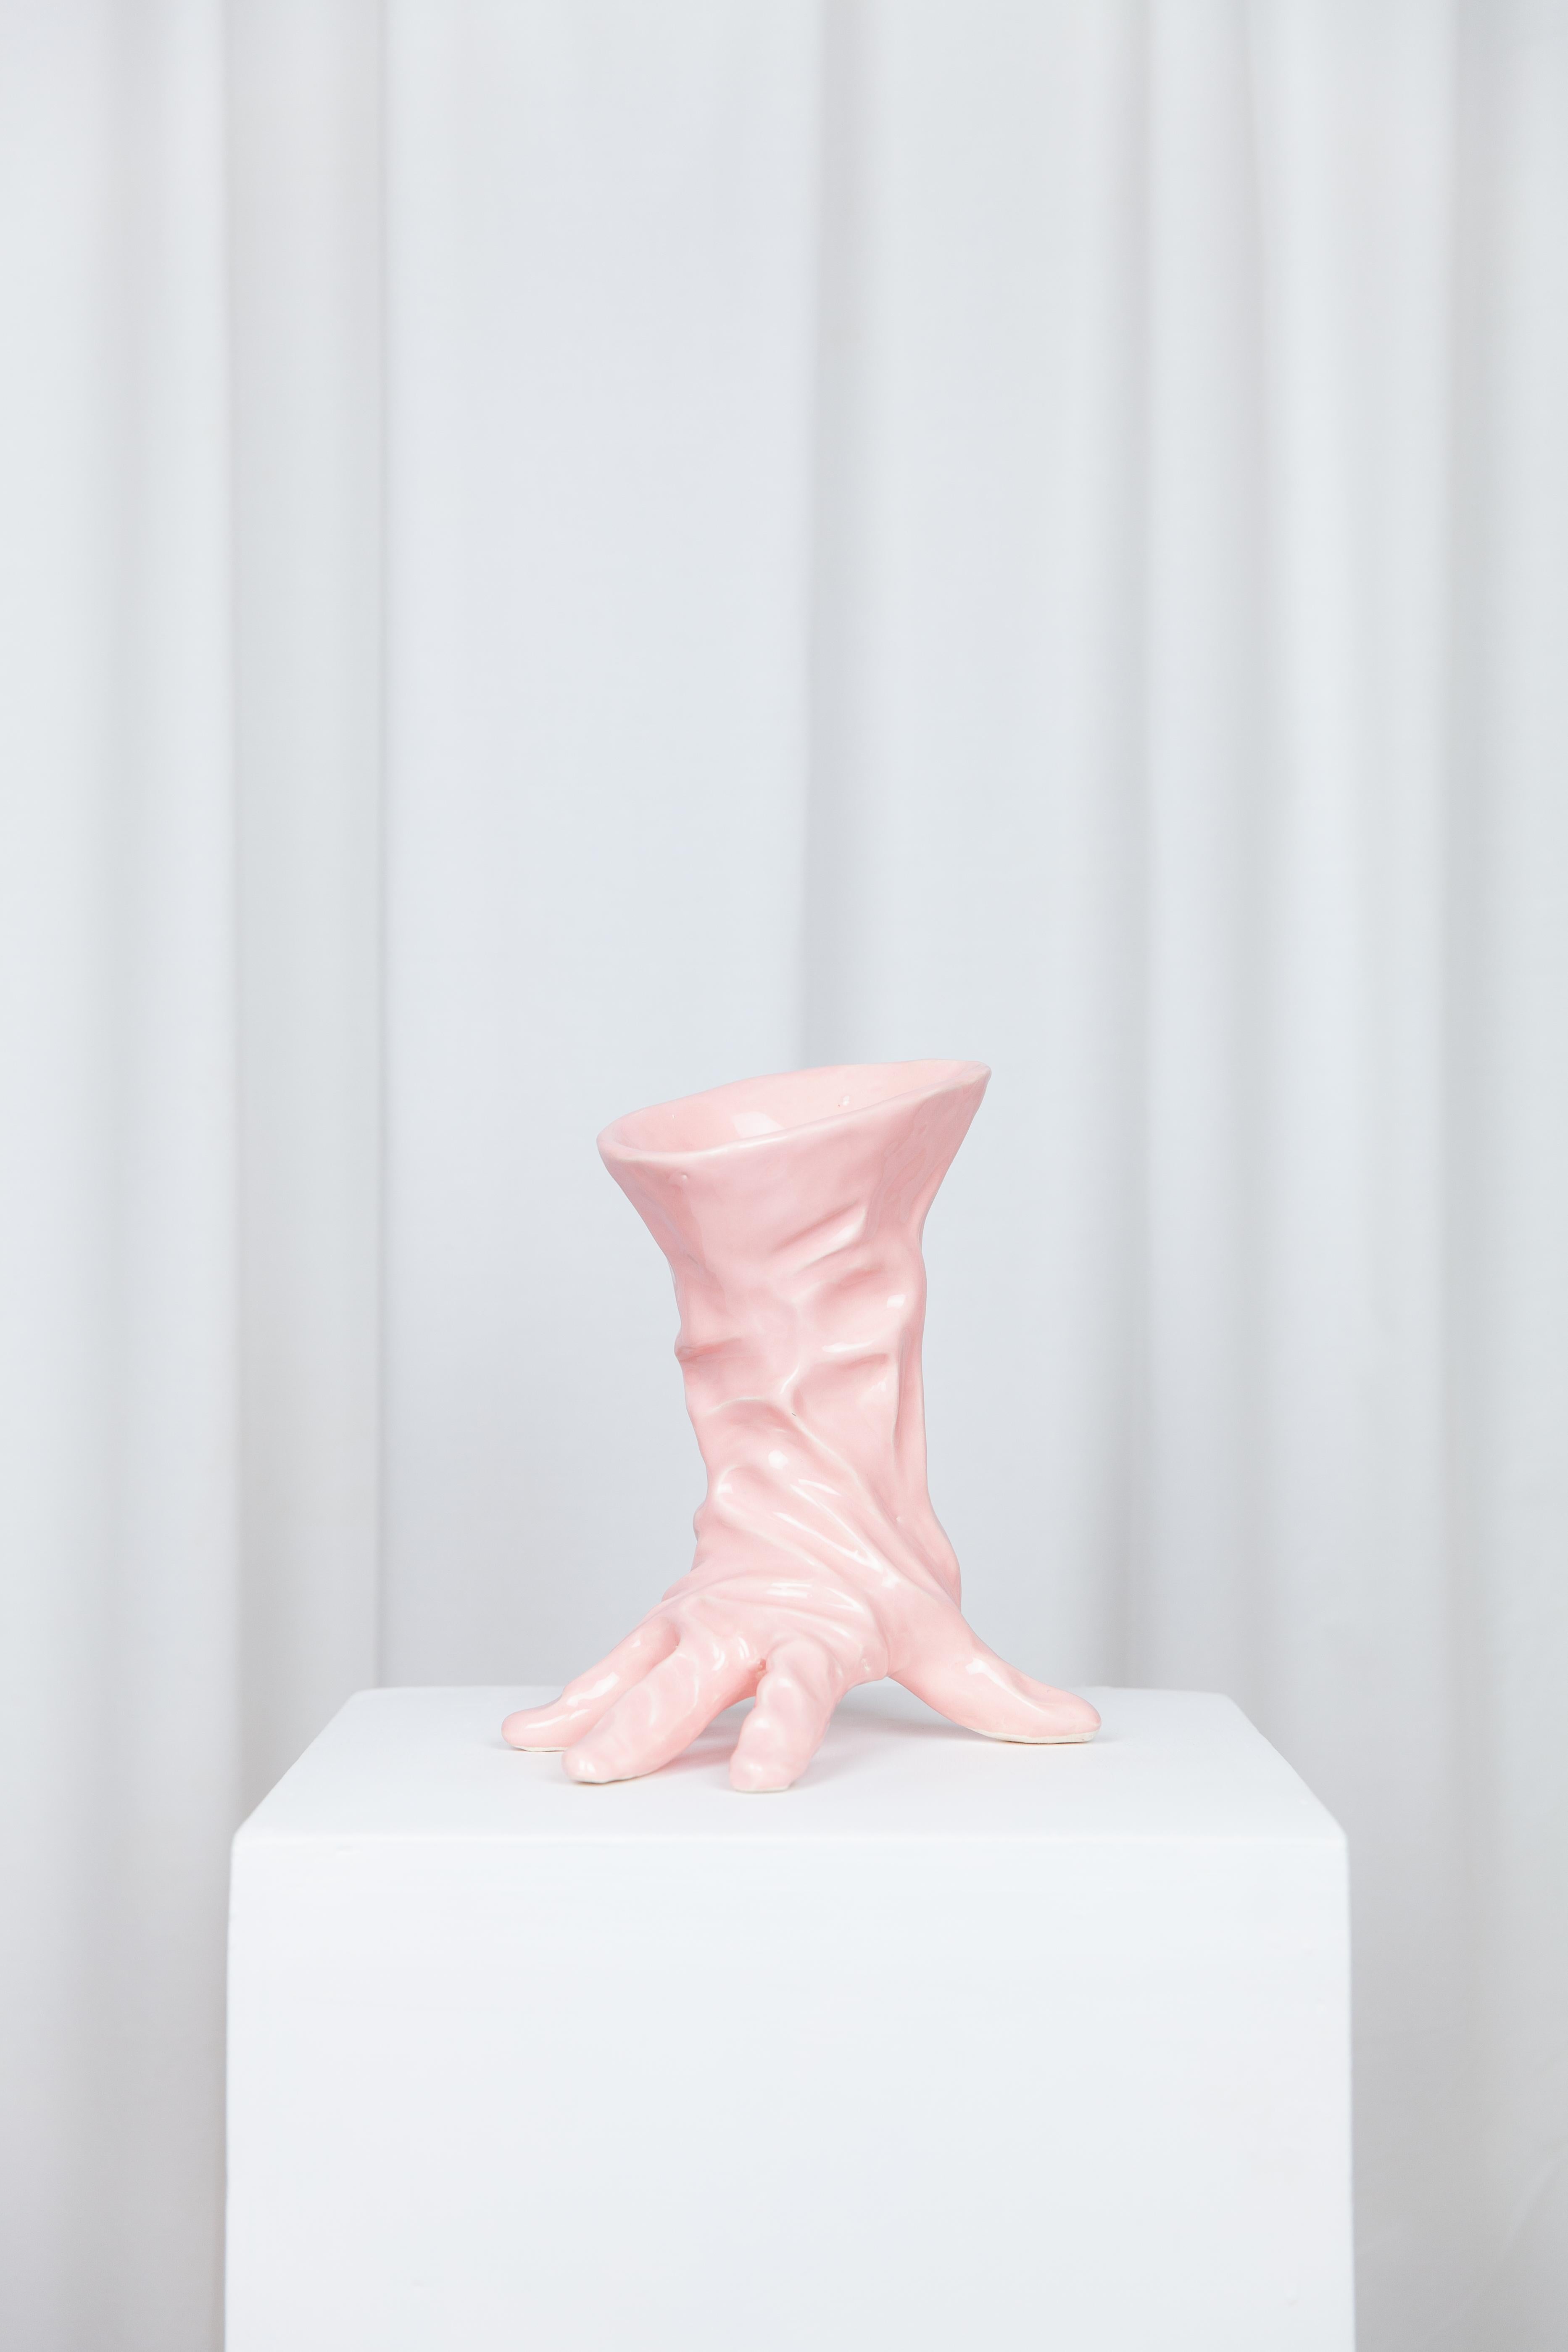 Post-Modern Cleaning Glove Vase by Lola Mayeras